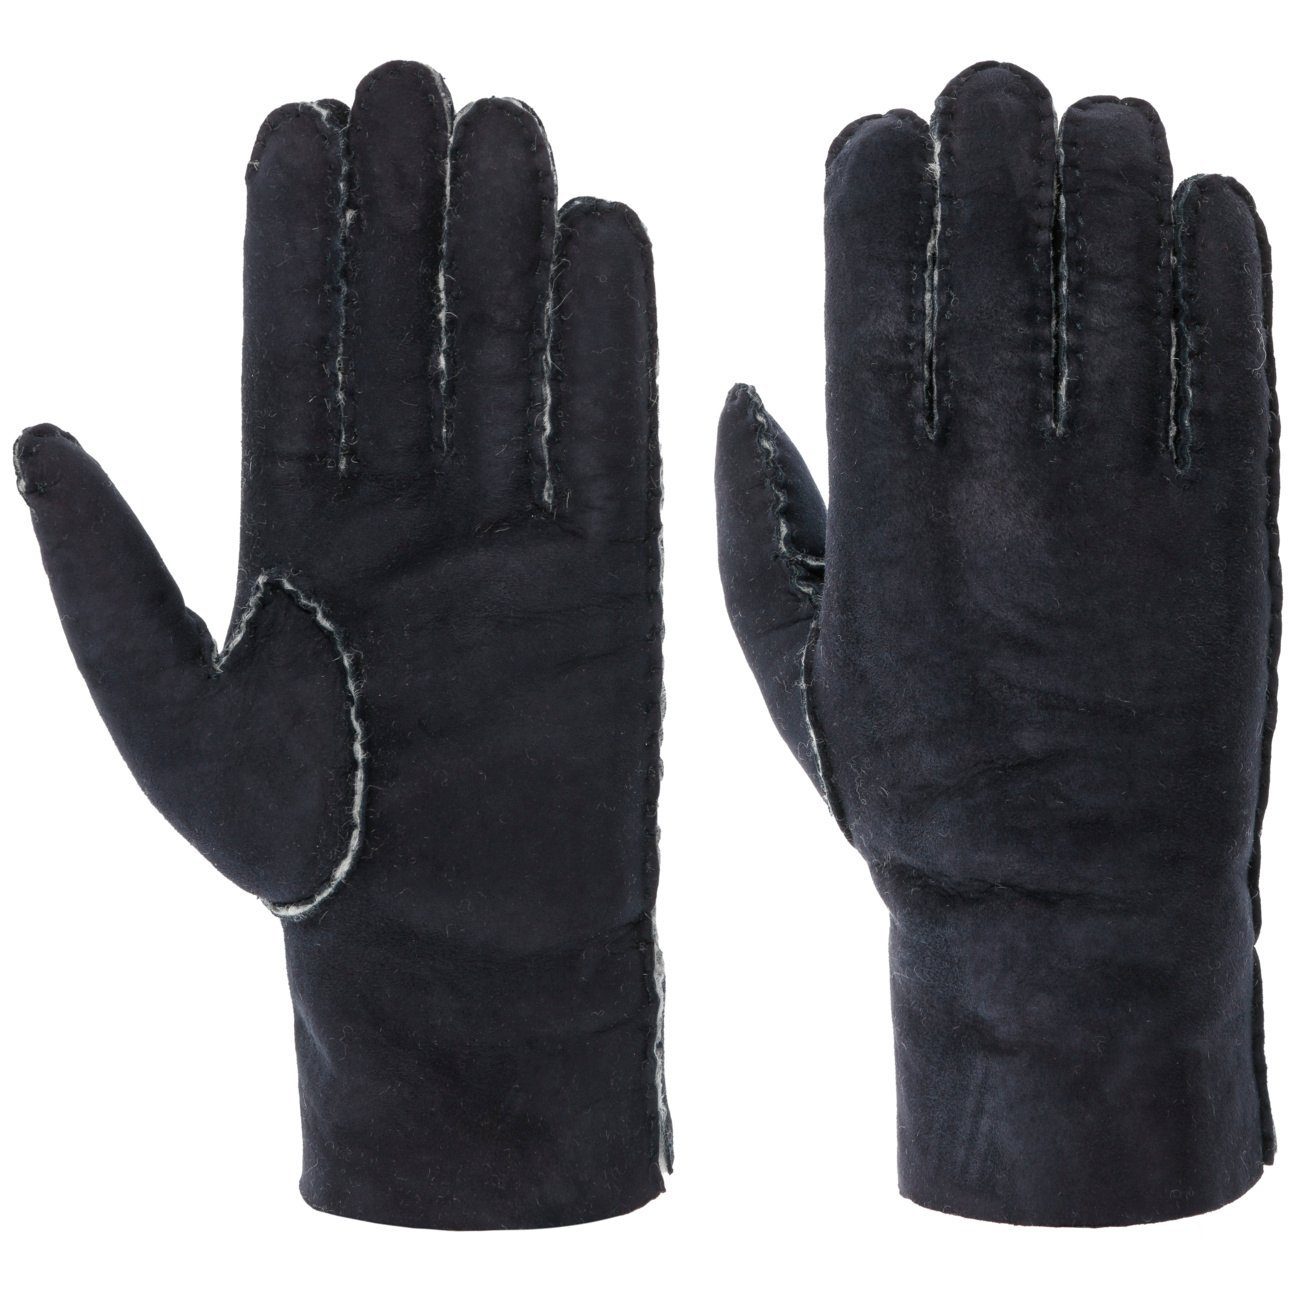 dunkelblau Futter, Caridei Made Italy Handschuhe in mit Lederhandschuhe